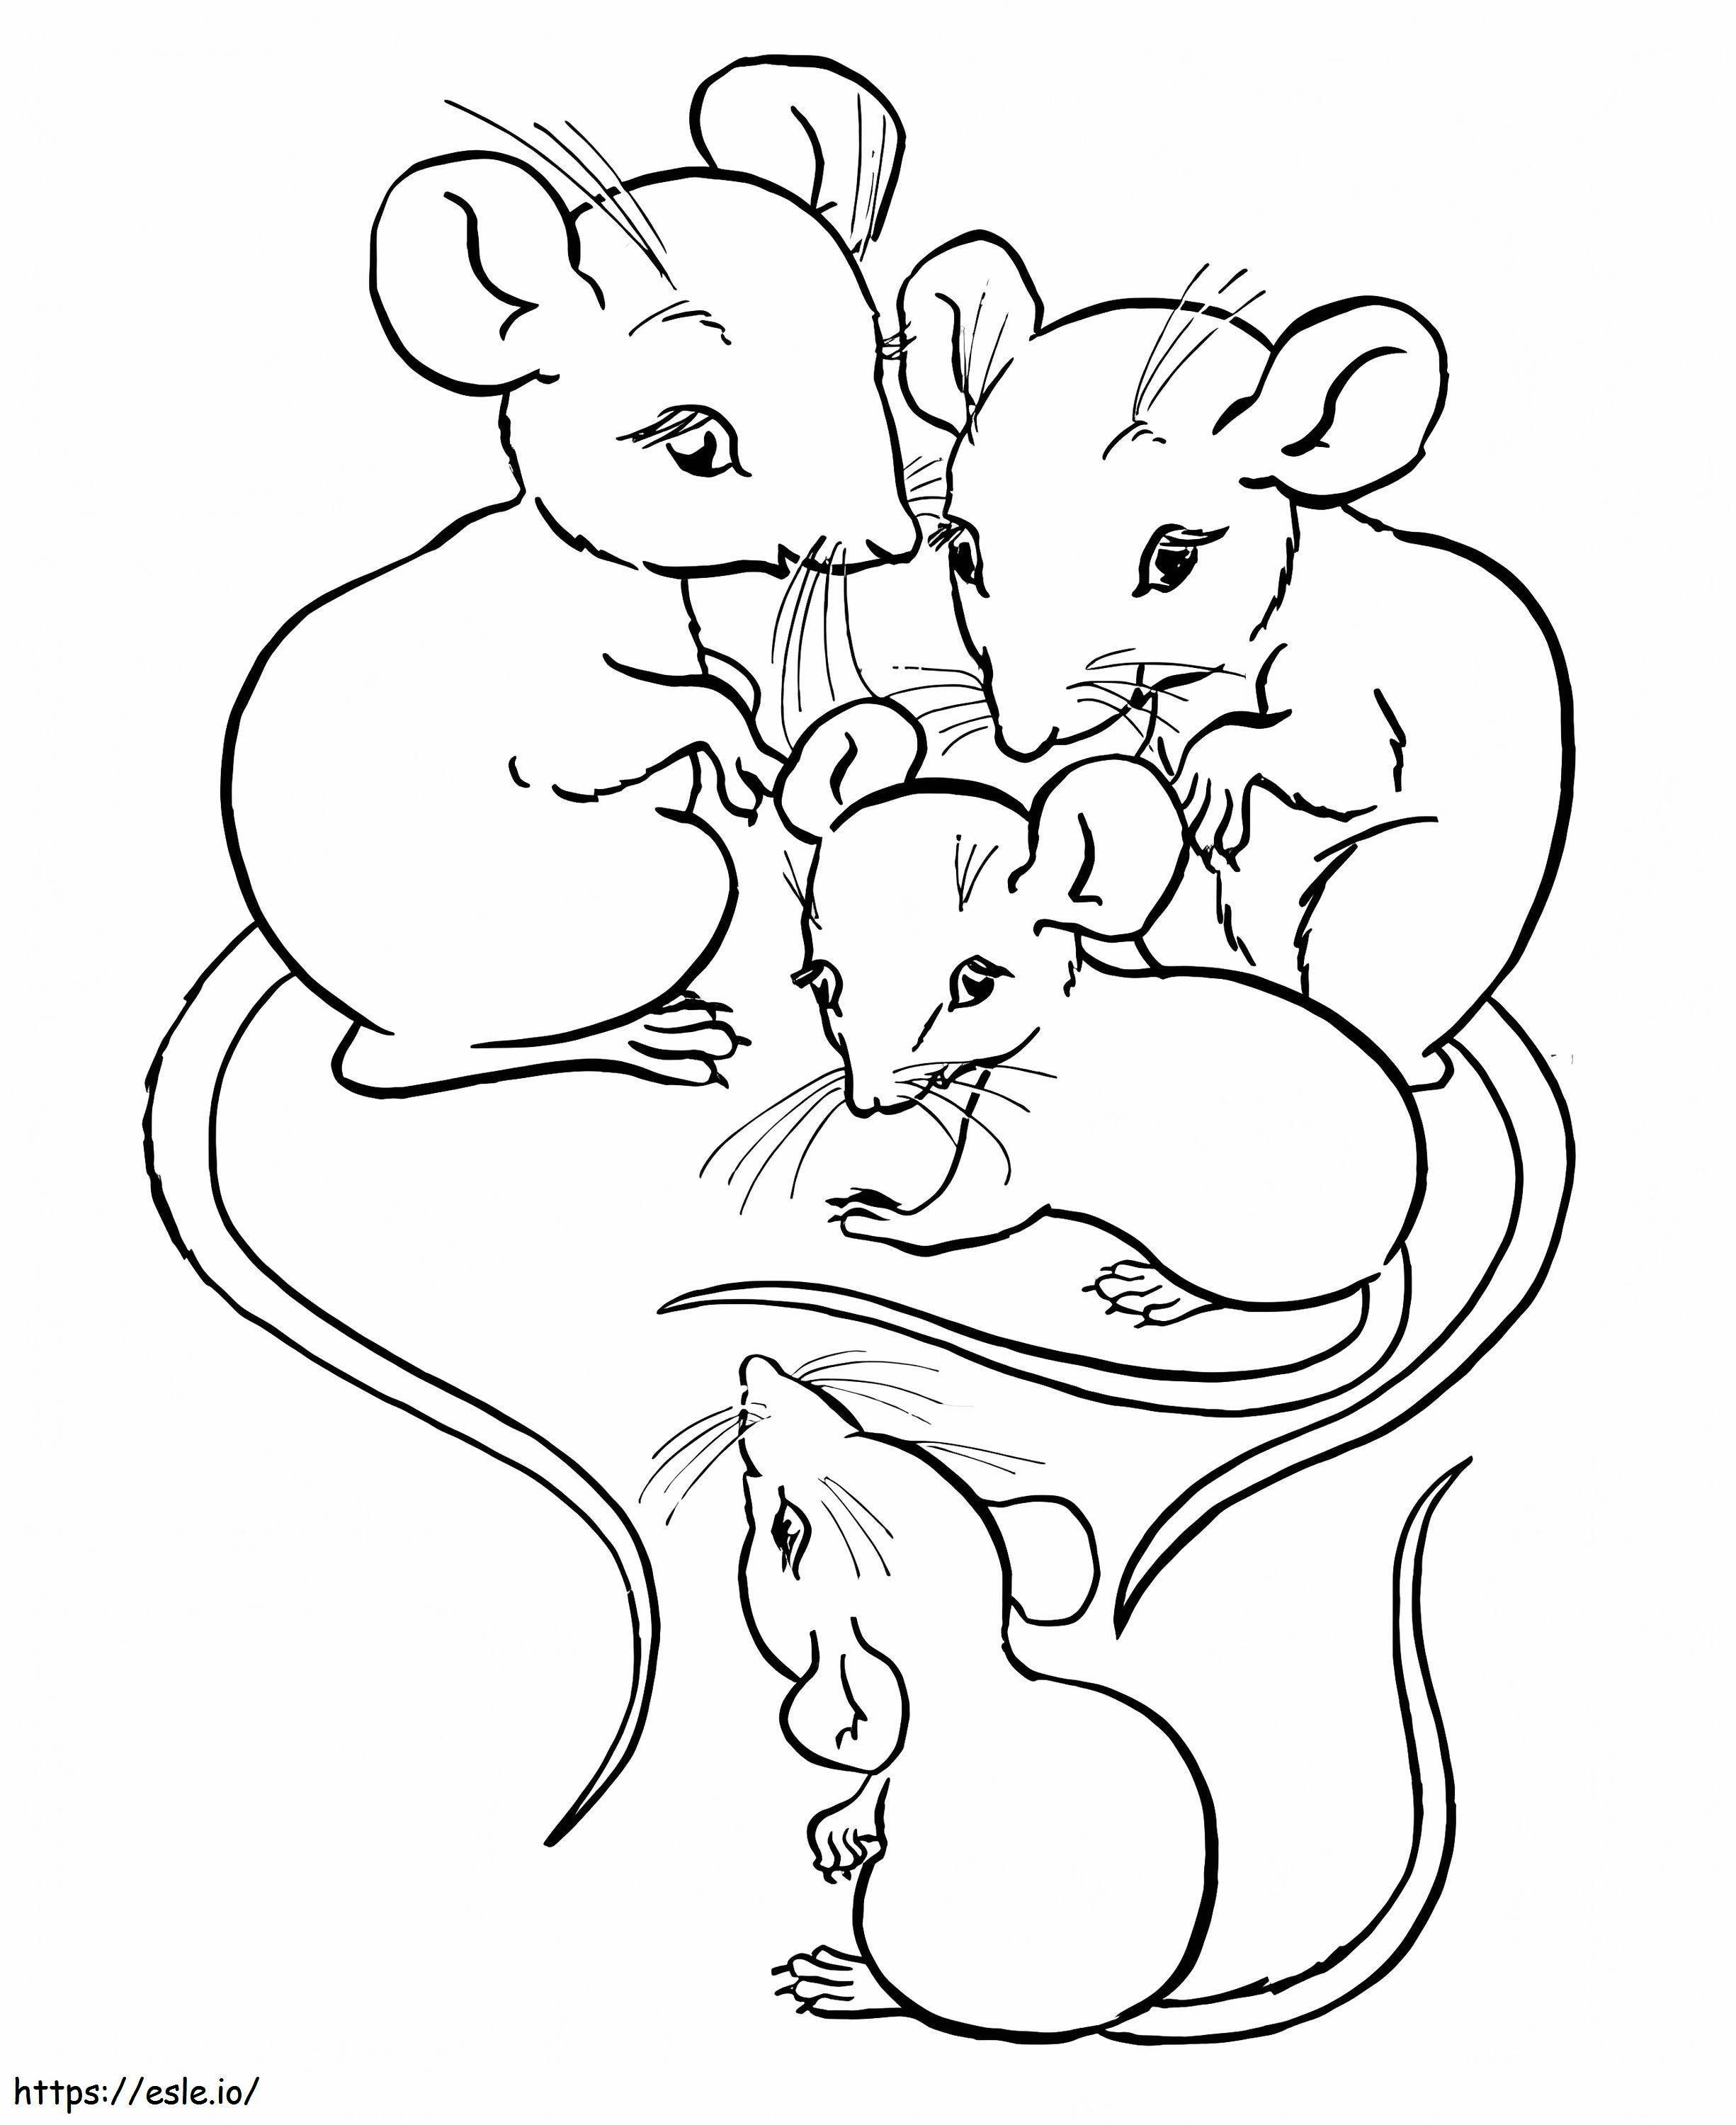 Quatro ratos para colorir